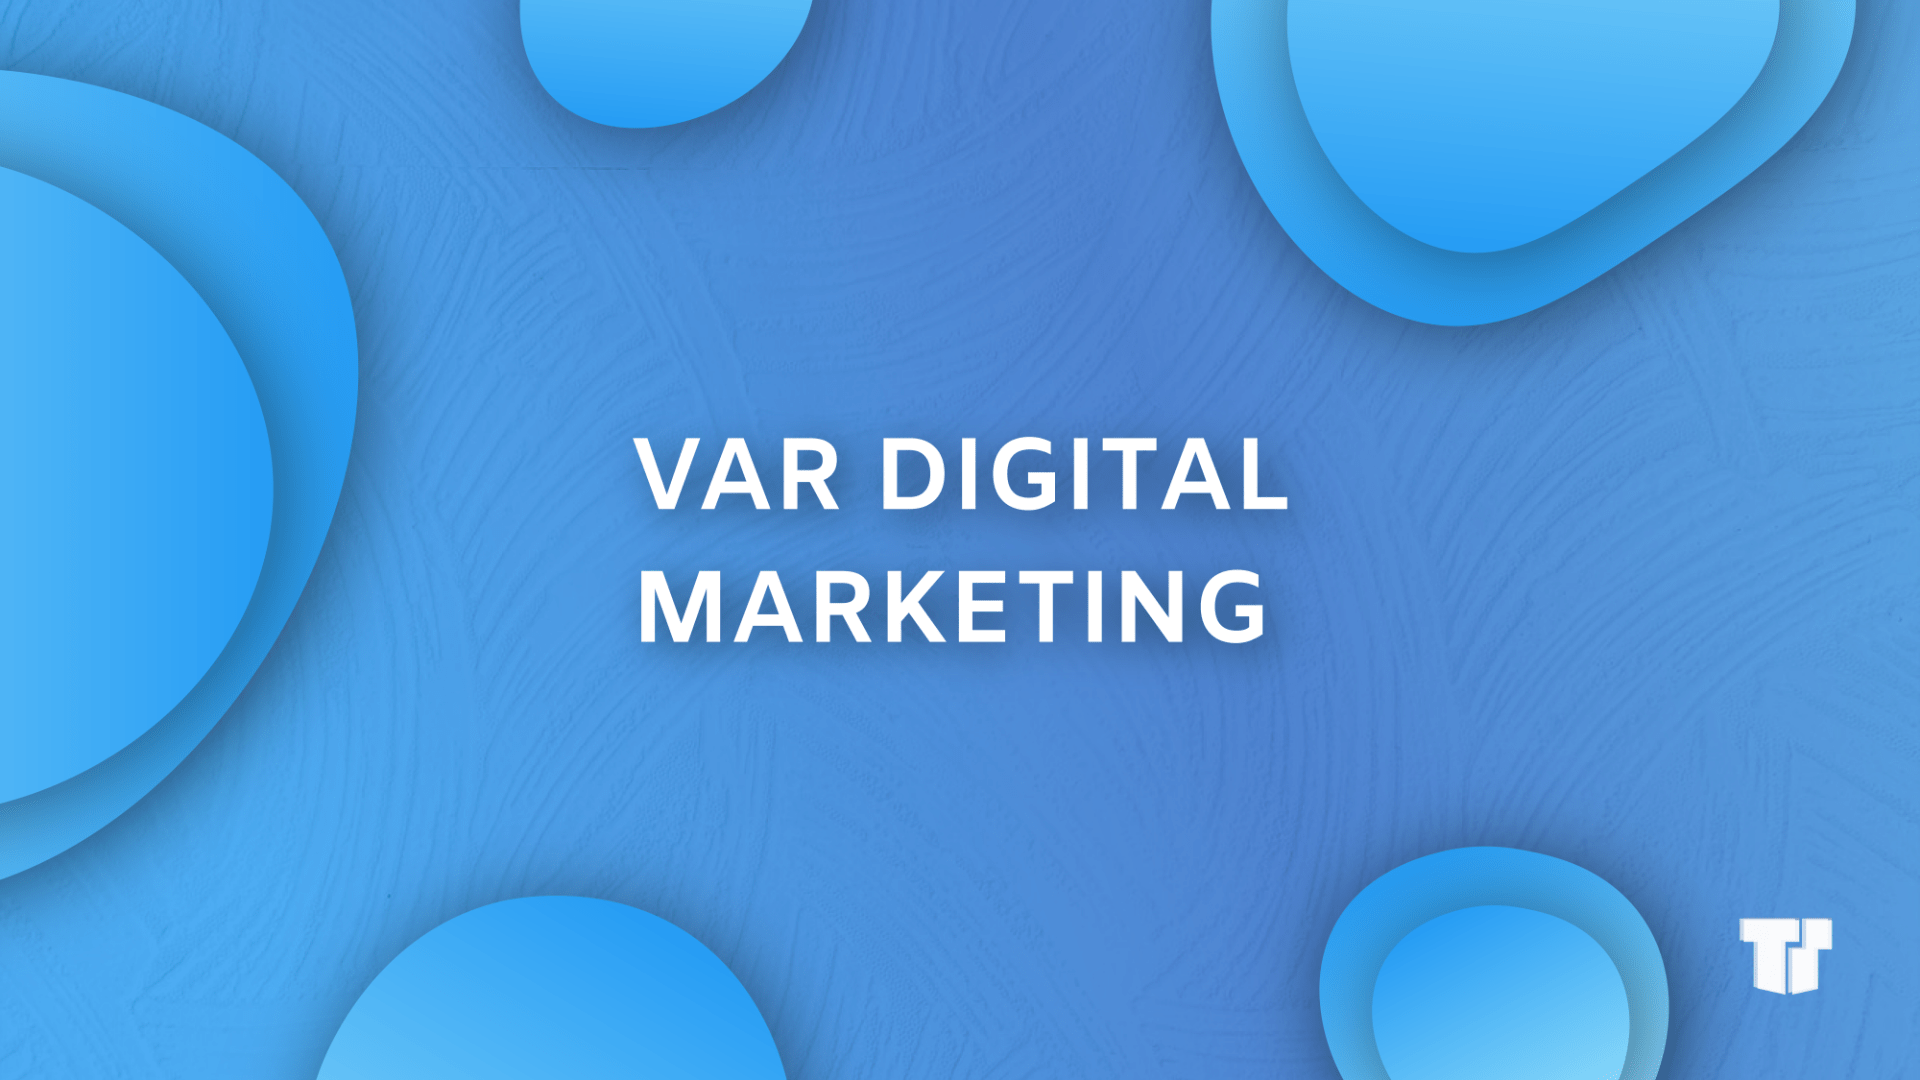 VAR Digital Marketing Explained cover image